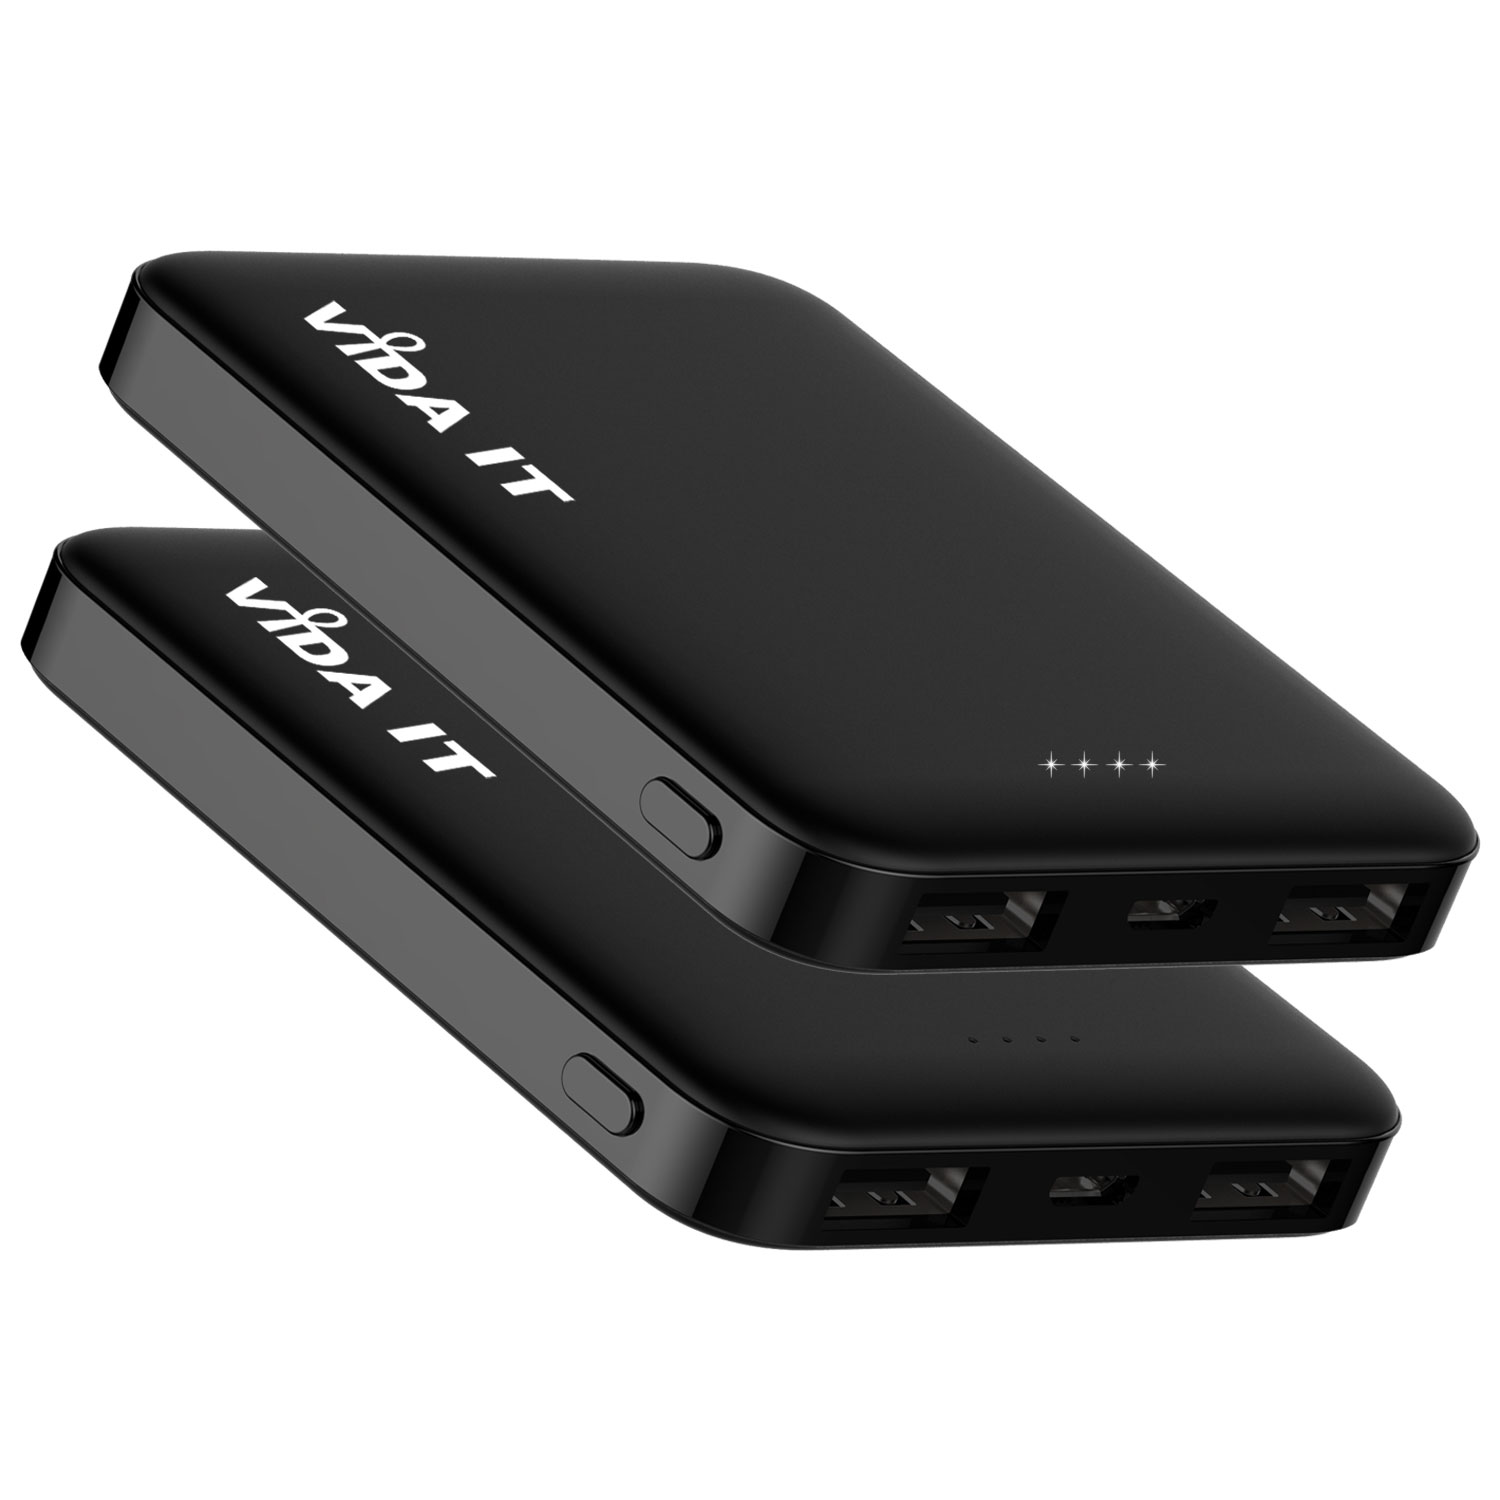 Small Power Bank 5000mAh USB Battery Pack Mini Portable Phone Charger  Reusable